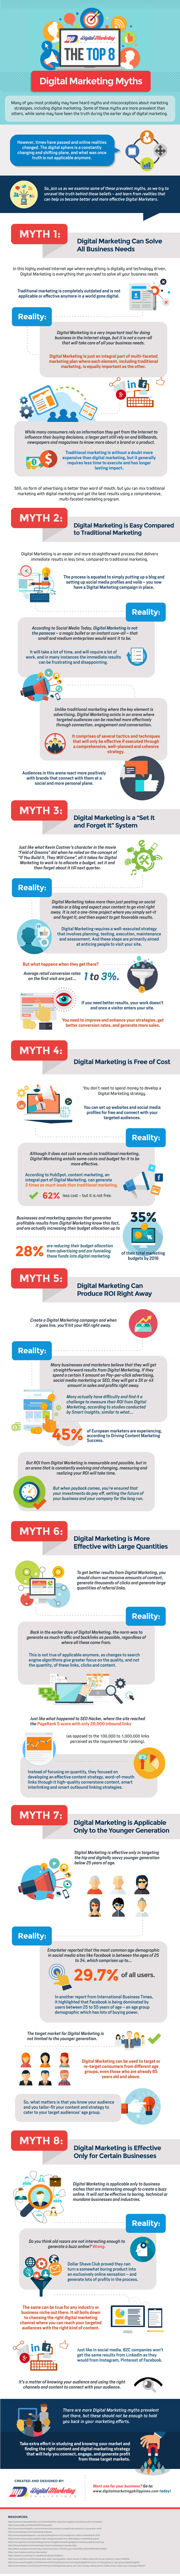 The-Top-8-Digital-Marketing-Myths